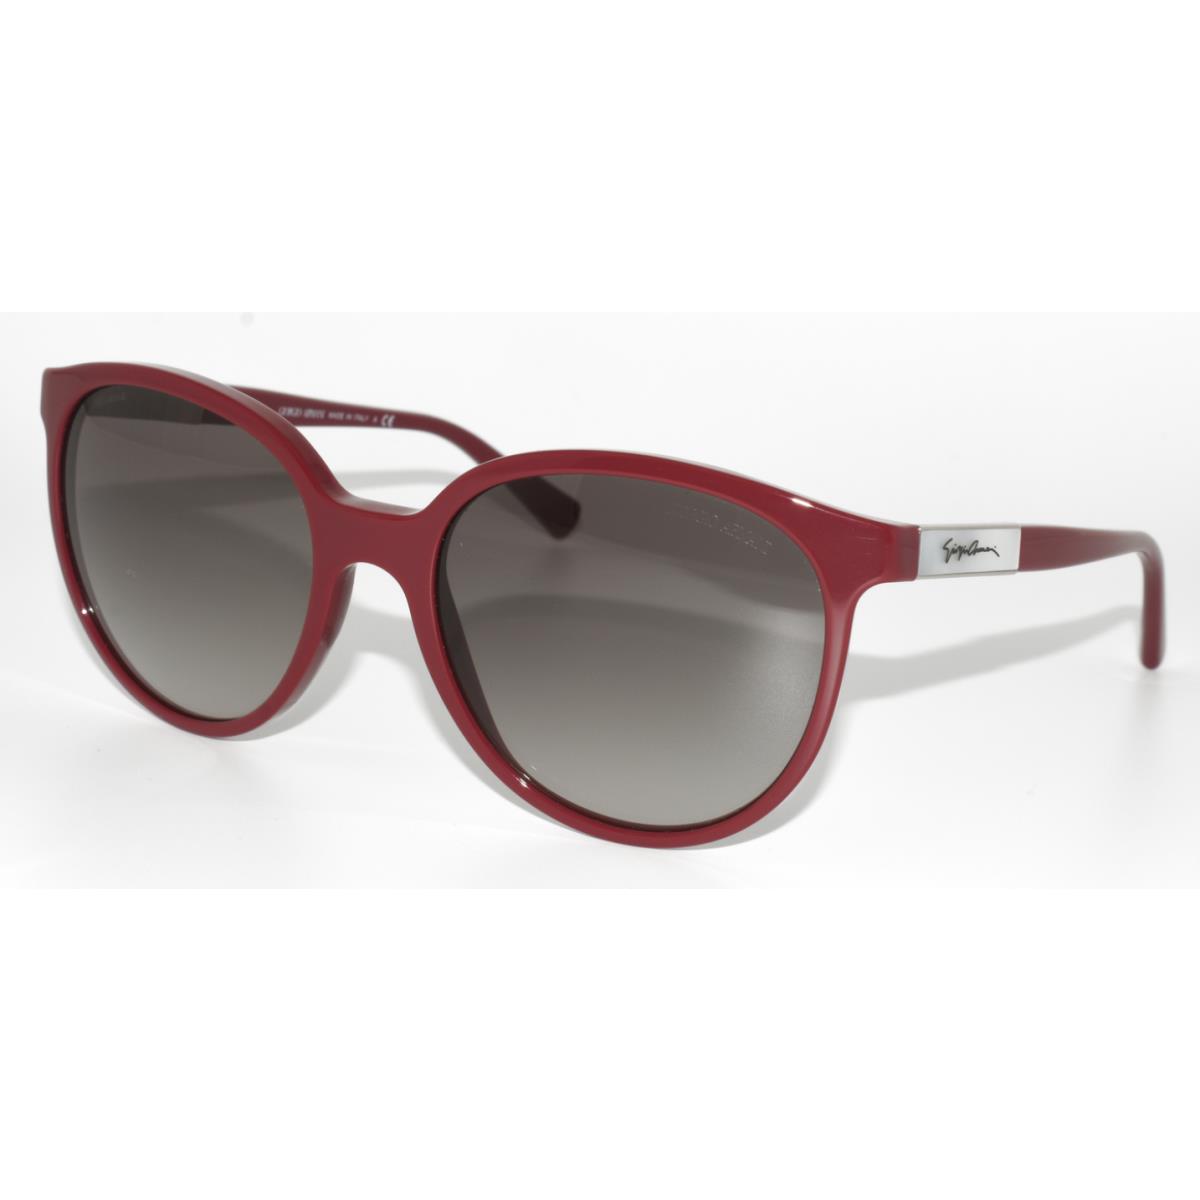 Giorgio Armani Sunglasses AR8043H 5289/11 Red Brown/gray Lens